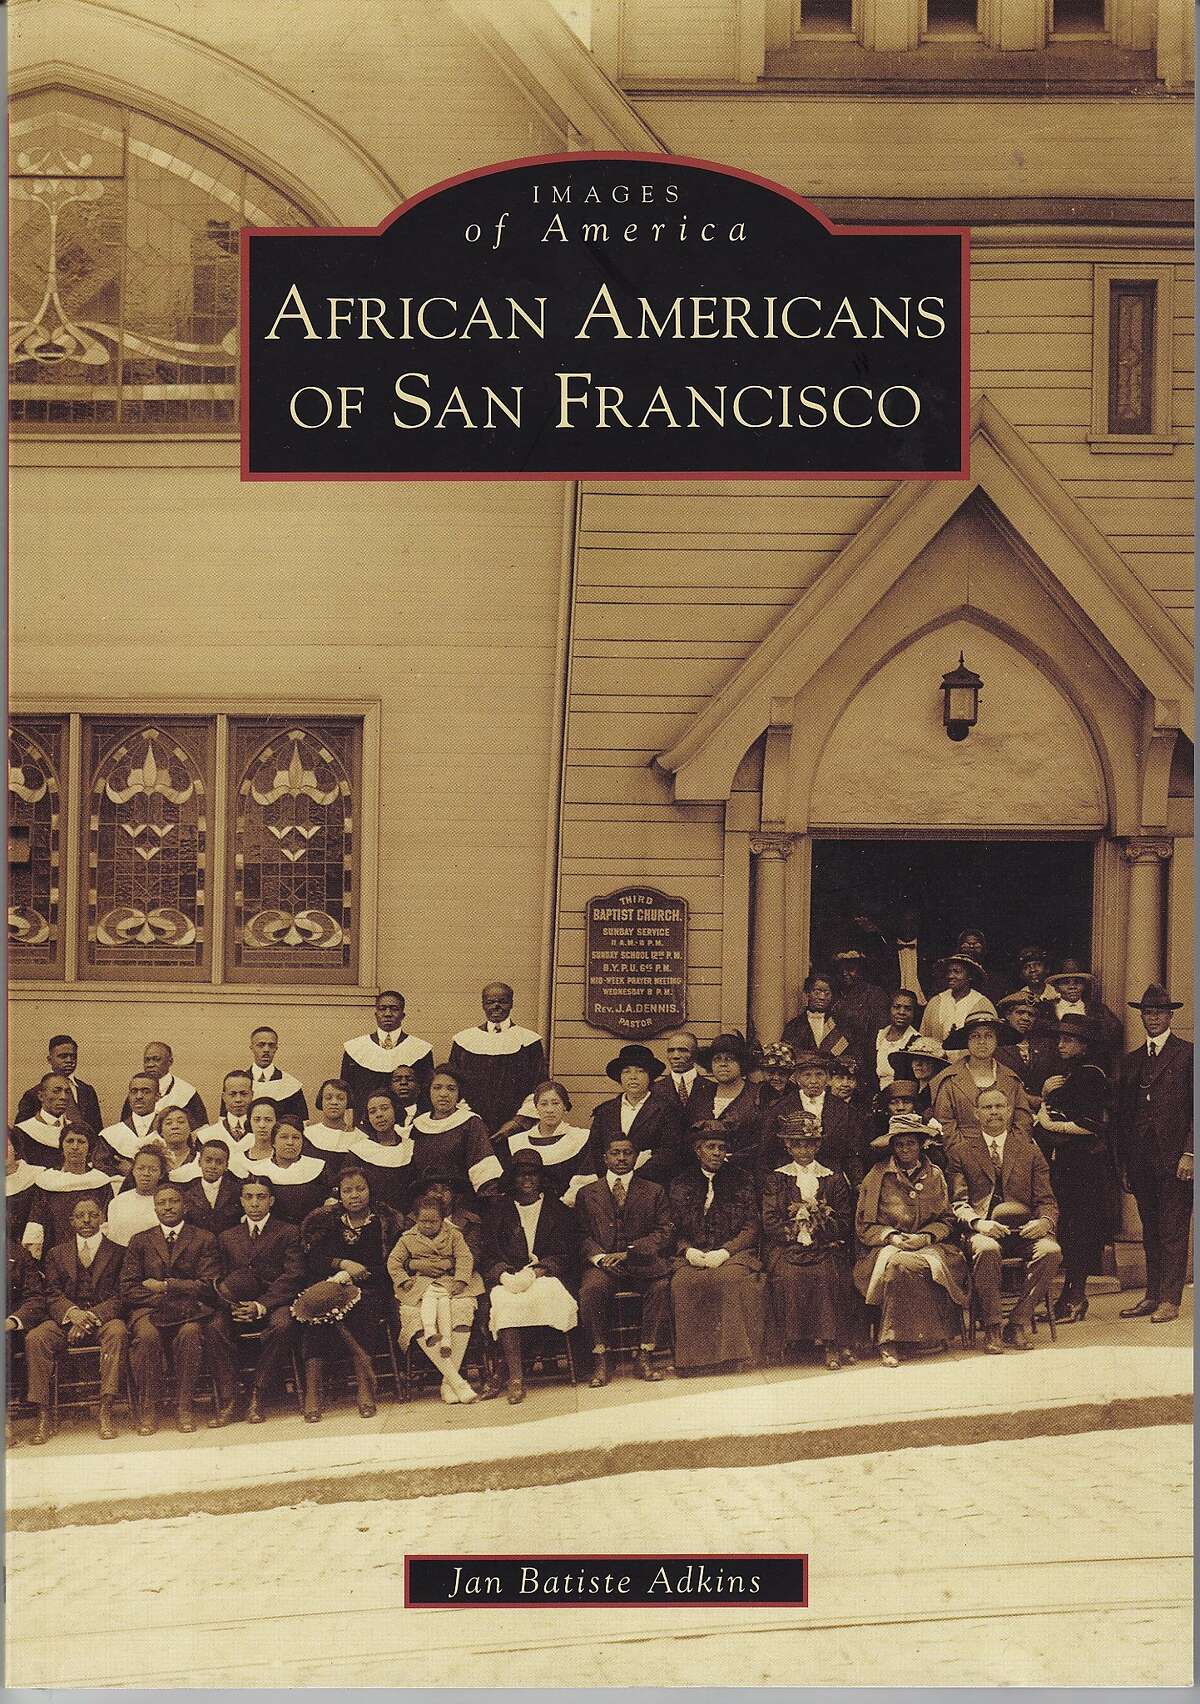 Jan Batiste Adkins is the author of "African Americans of San Francisco."